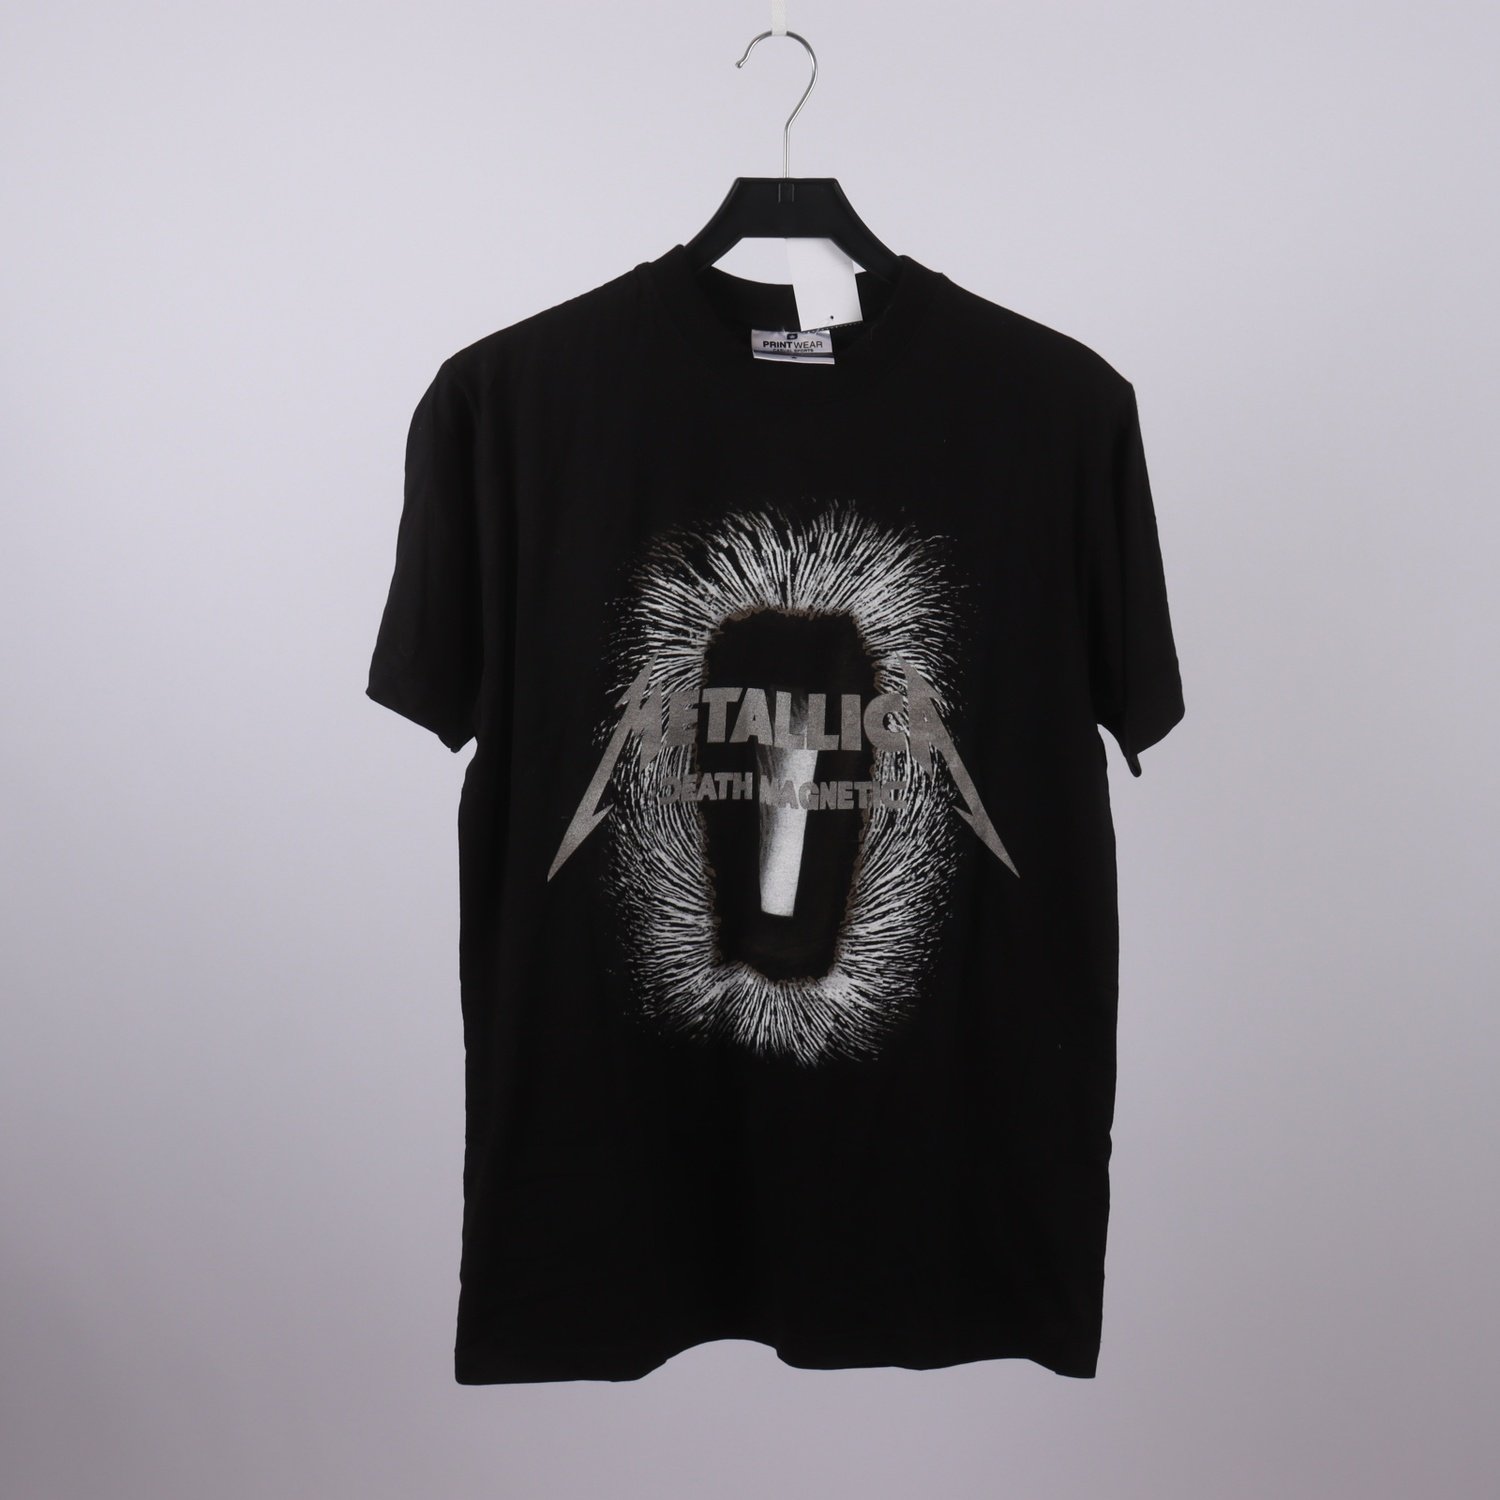 T-shirt, Metallica, Tour 2009, svart, stl. S